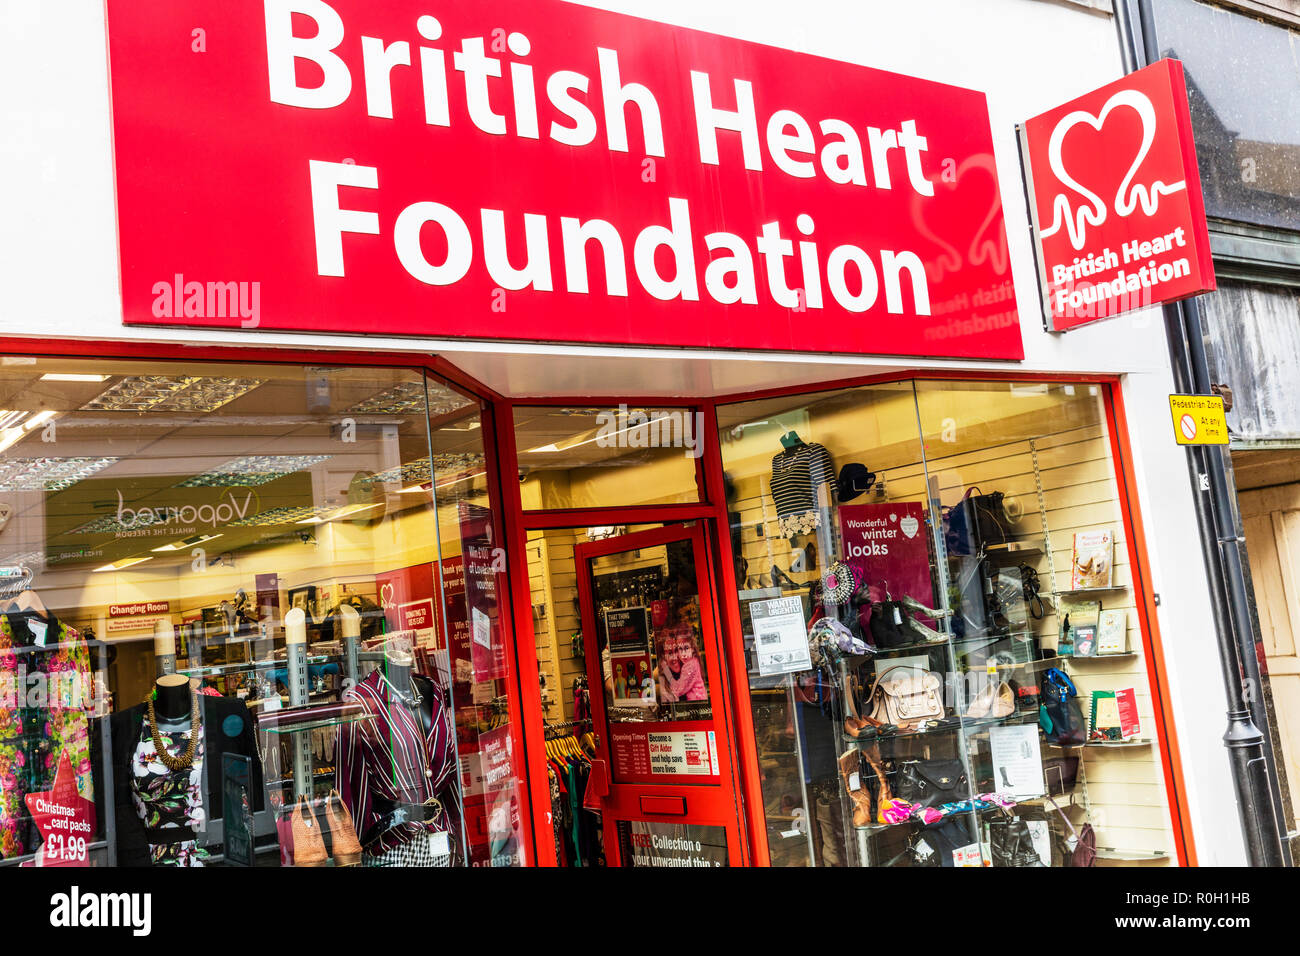 British Heart Foundation Charity Shop British Heart Foundation Charity Shops British Heart 